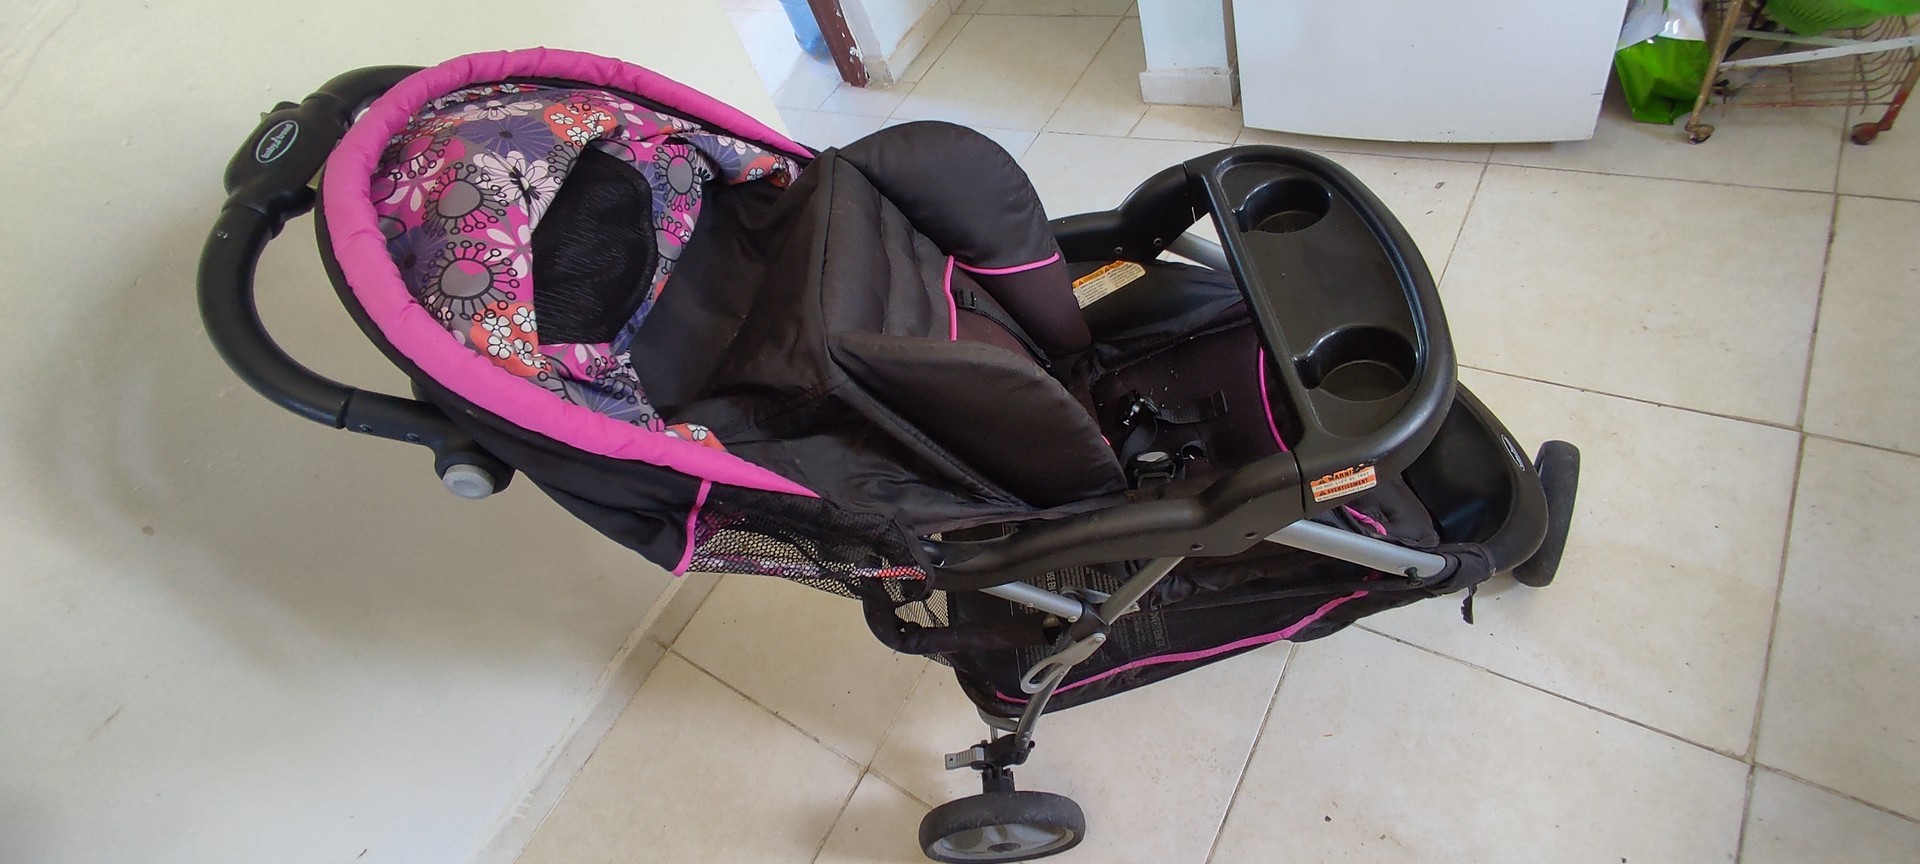 coches y sillas - Coche baby trend, un solo uso..
$6,000